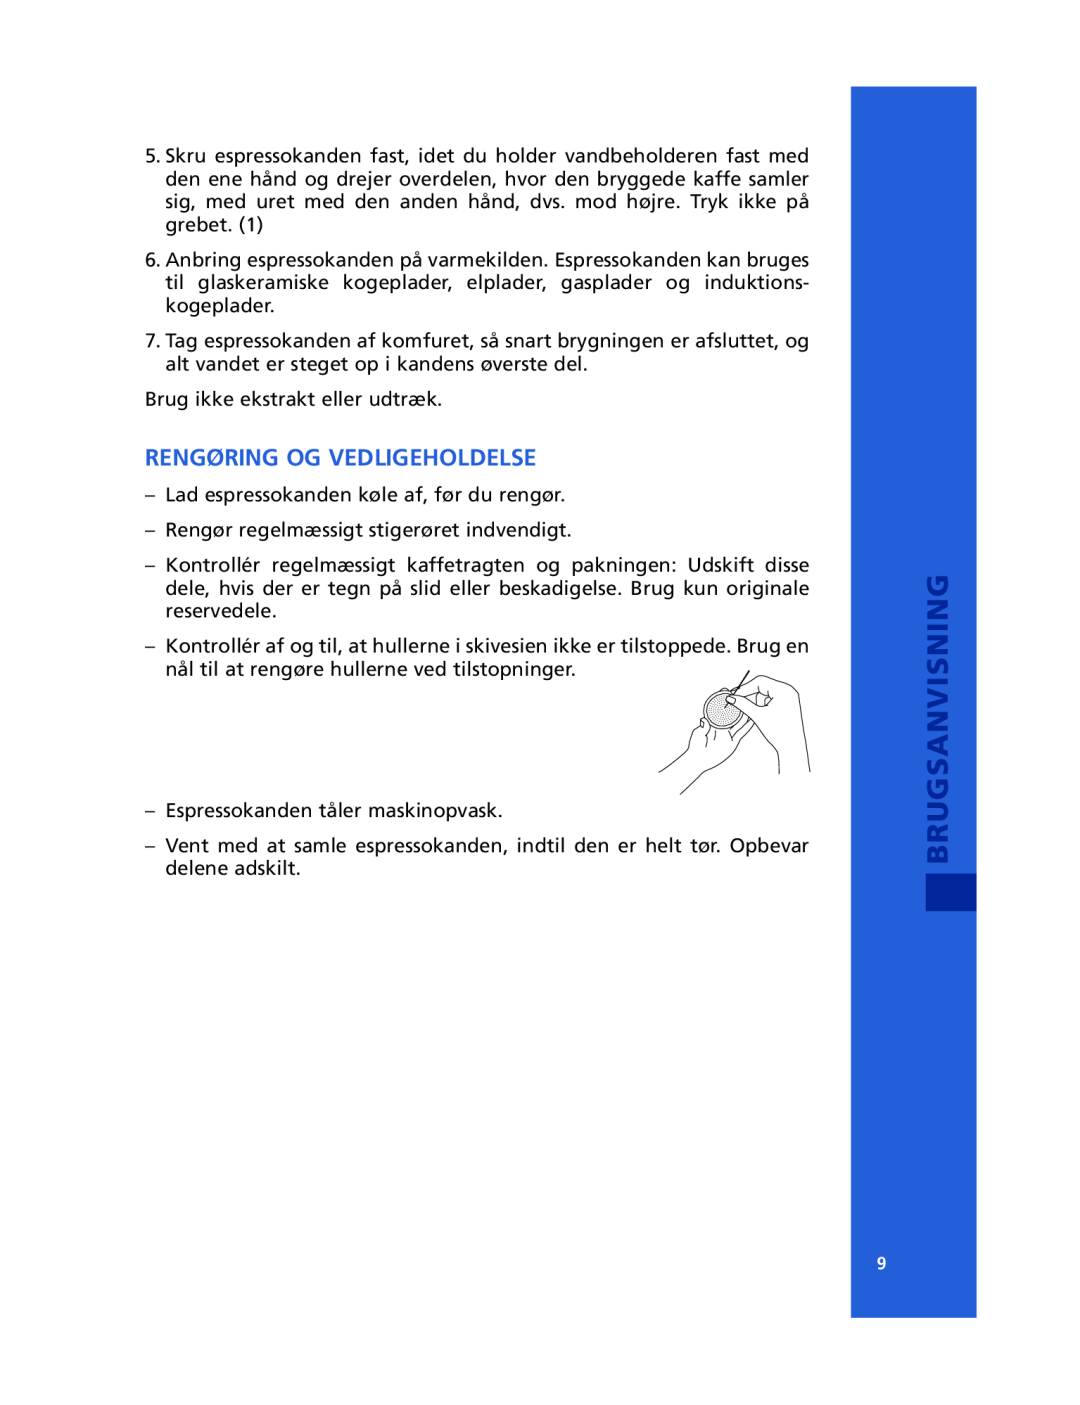 Bodum 10617, 10616, 10759 manual Brugsanvisning, Rengøring Og Vedligeholdelse 